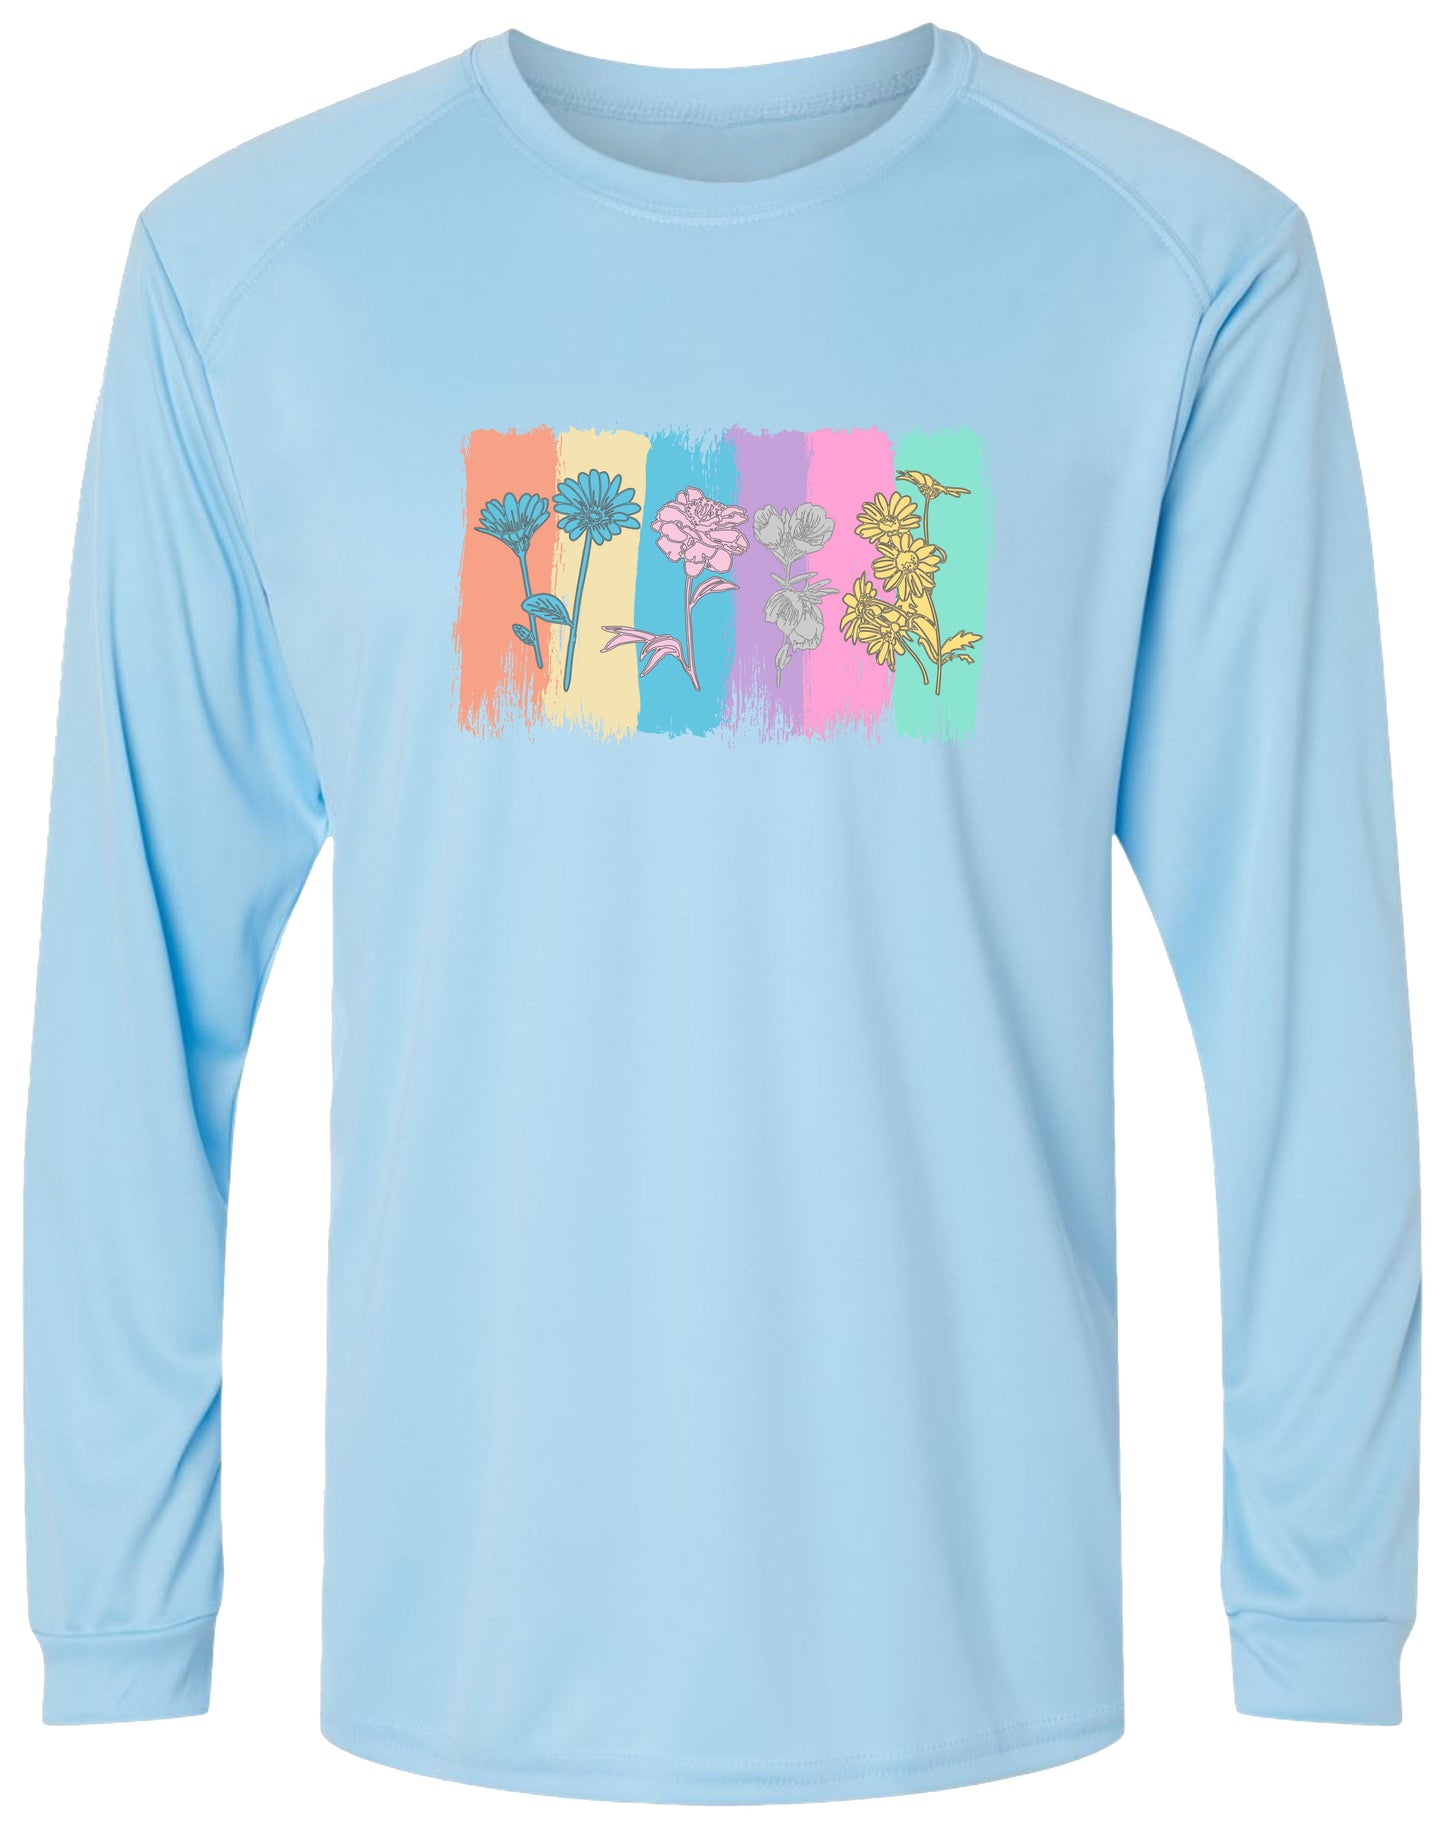 111 LW Background and Flowers Long Sleeve UPF 50+ Shirt Lake Shirt Beach Shirt Gardening Shirt Casual Shirt Outdoor Shirt